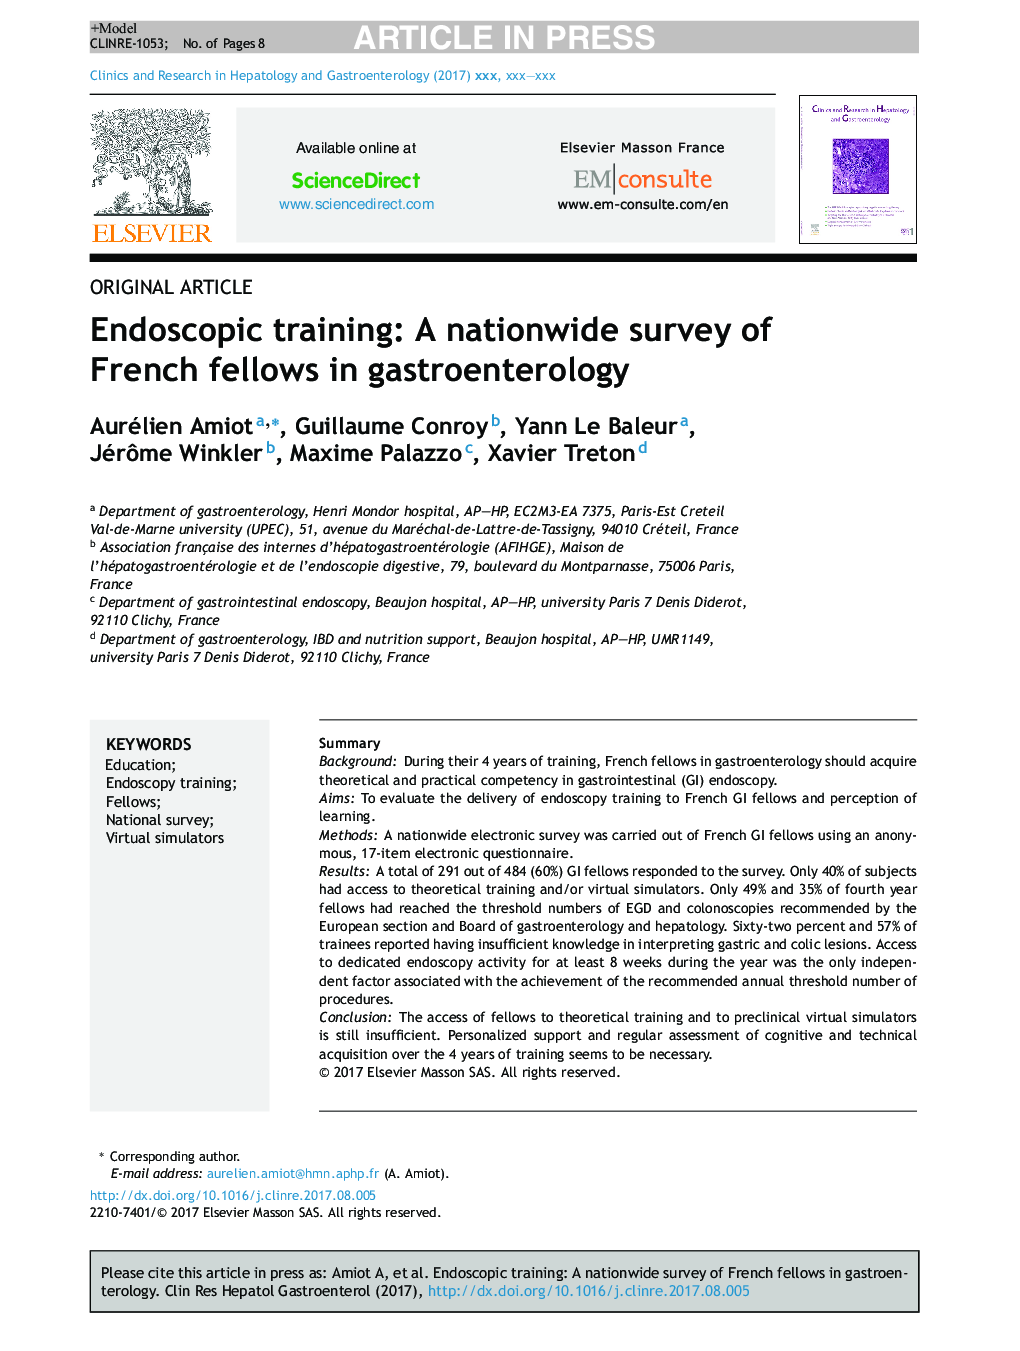 Endoscopic training: A nationwide survey of French fellows in gastroenterology